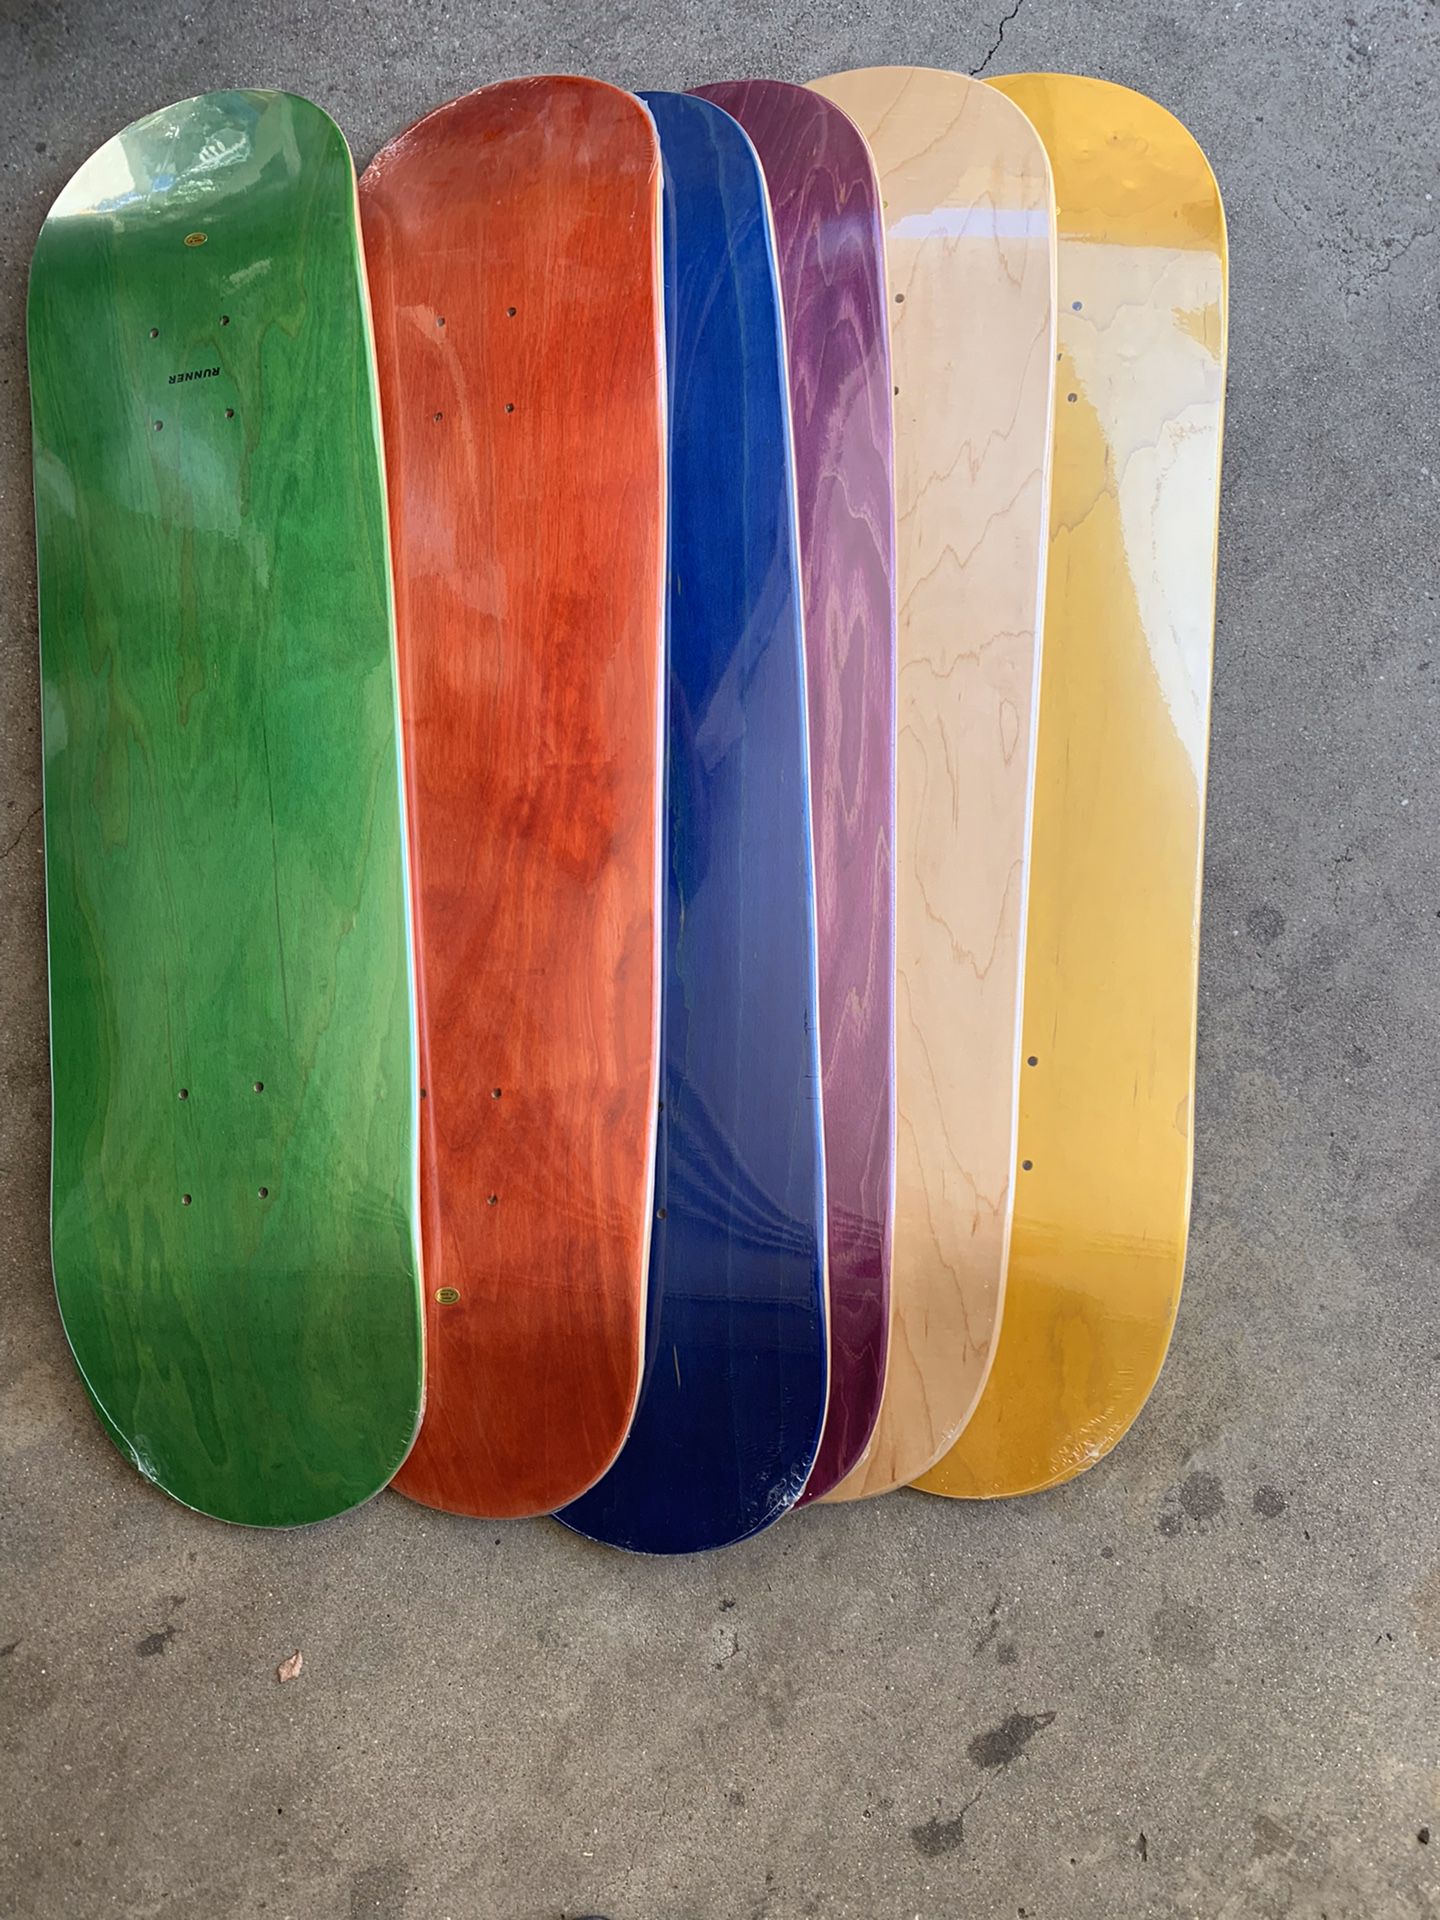 New maple wood skateboard decks